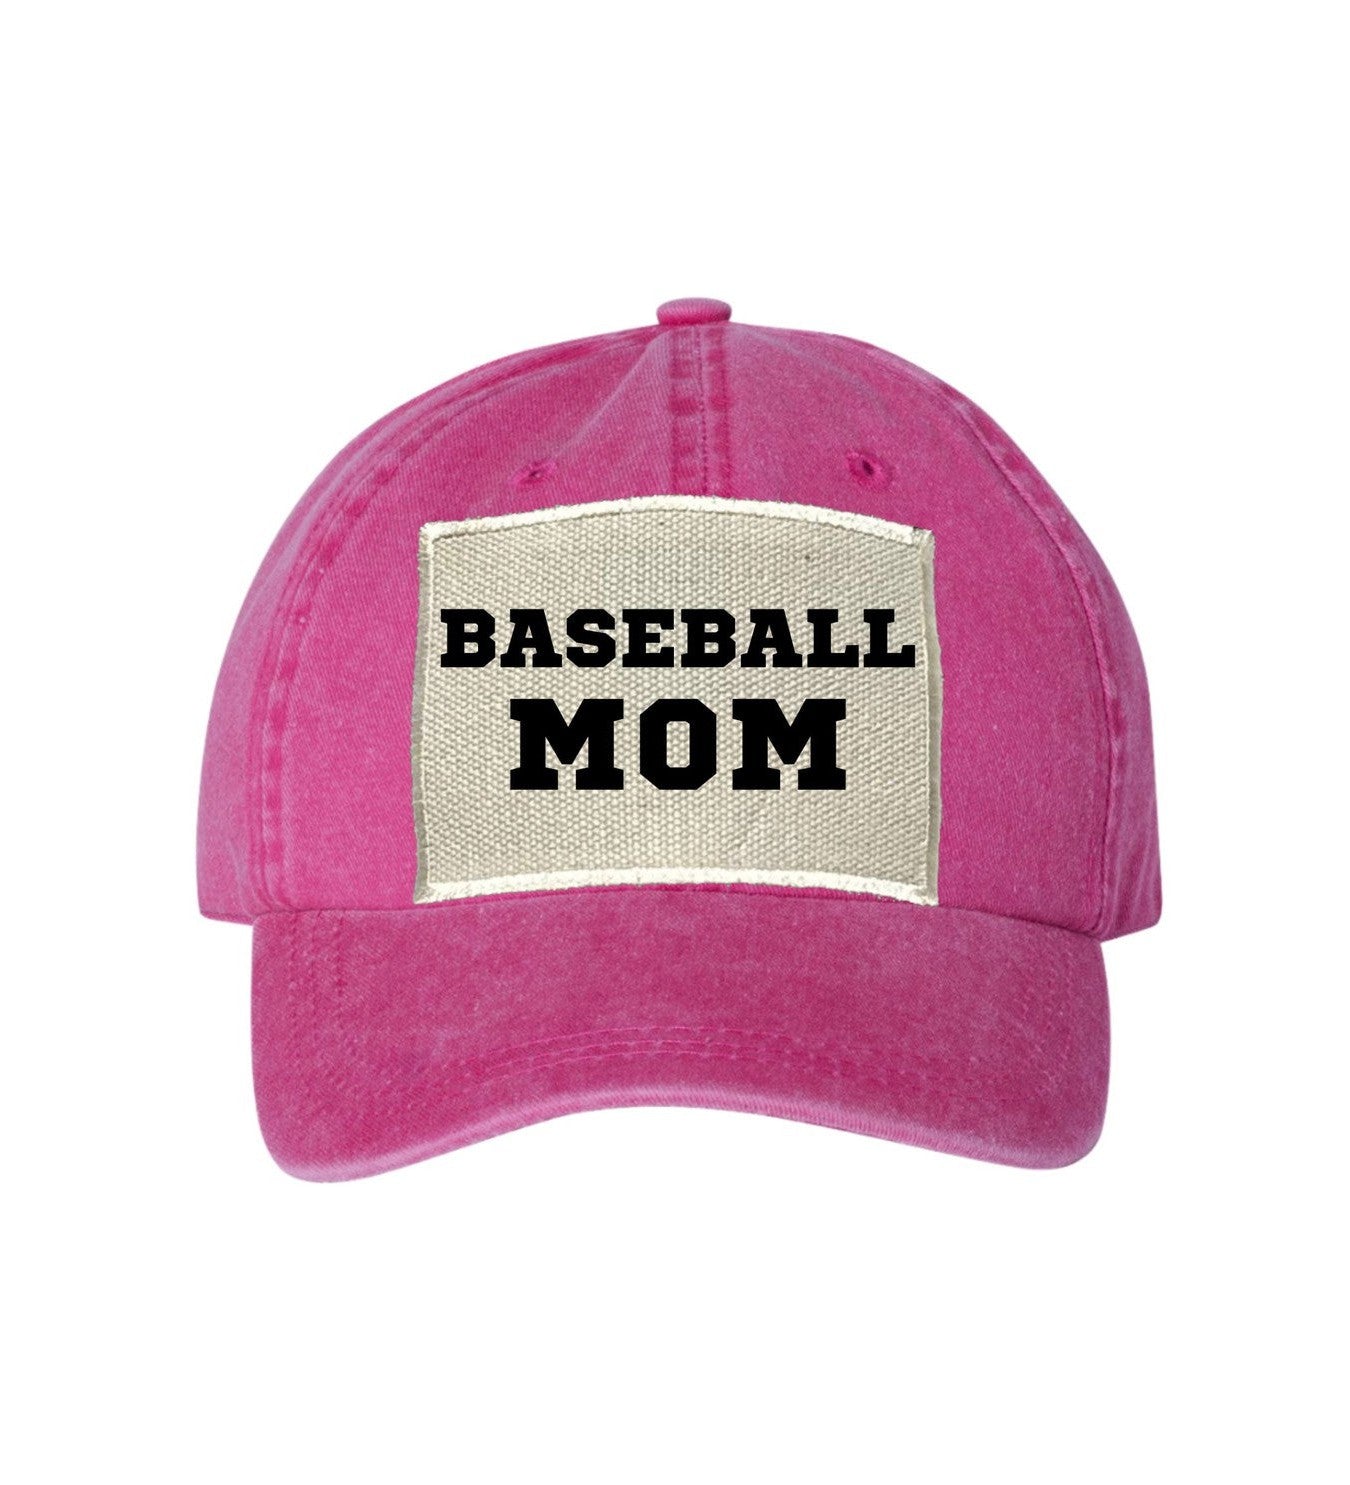 Baseball Mom Ball Cap